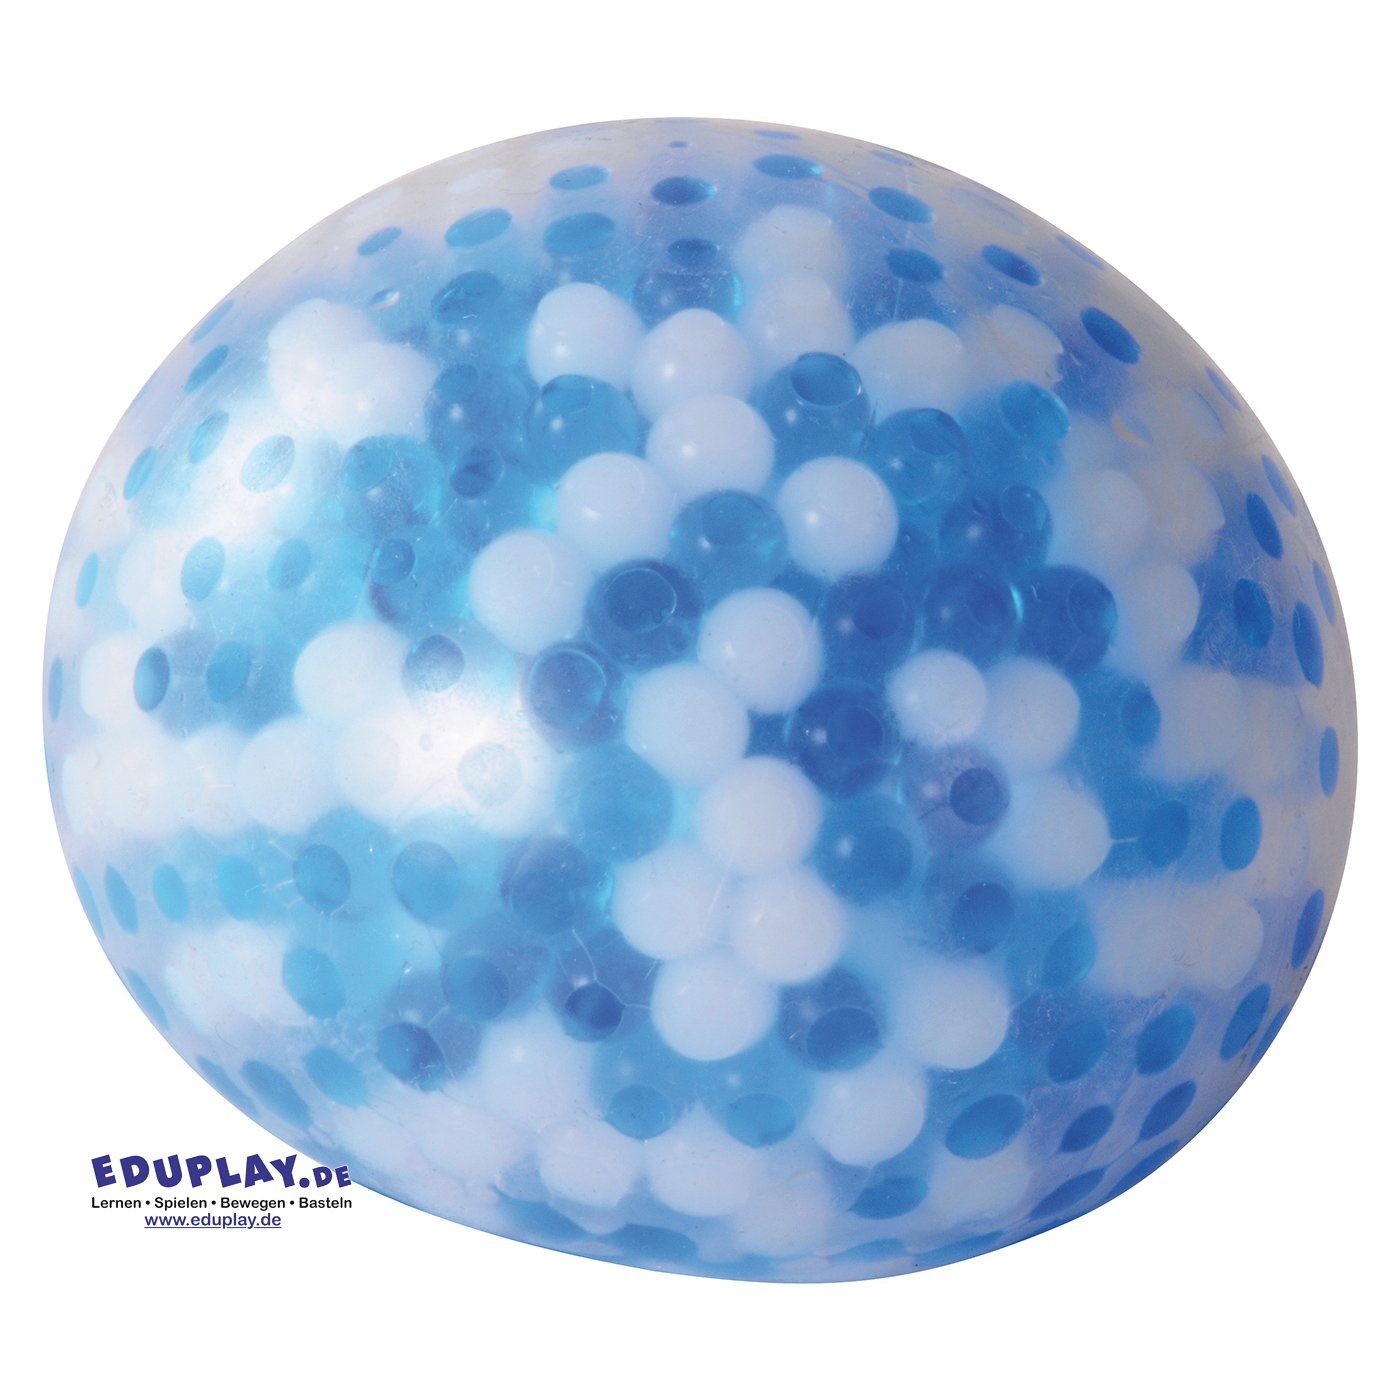 EDUPLAY Lernspielzeug Sensorik-Ball "Trösterchen", Ø 10 cm